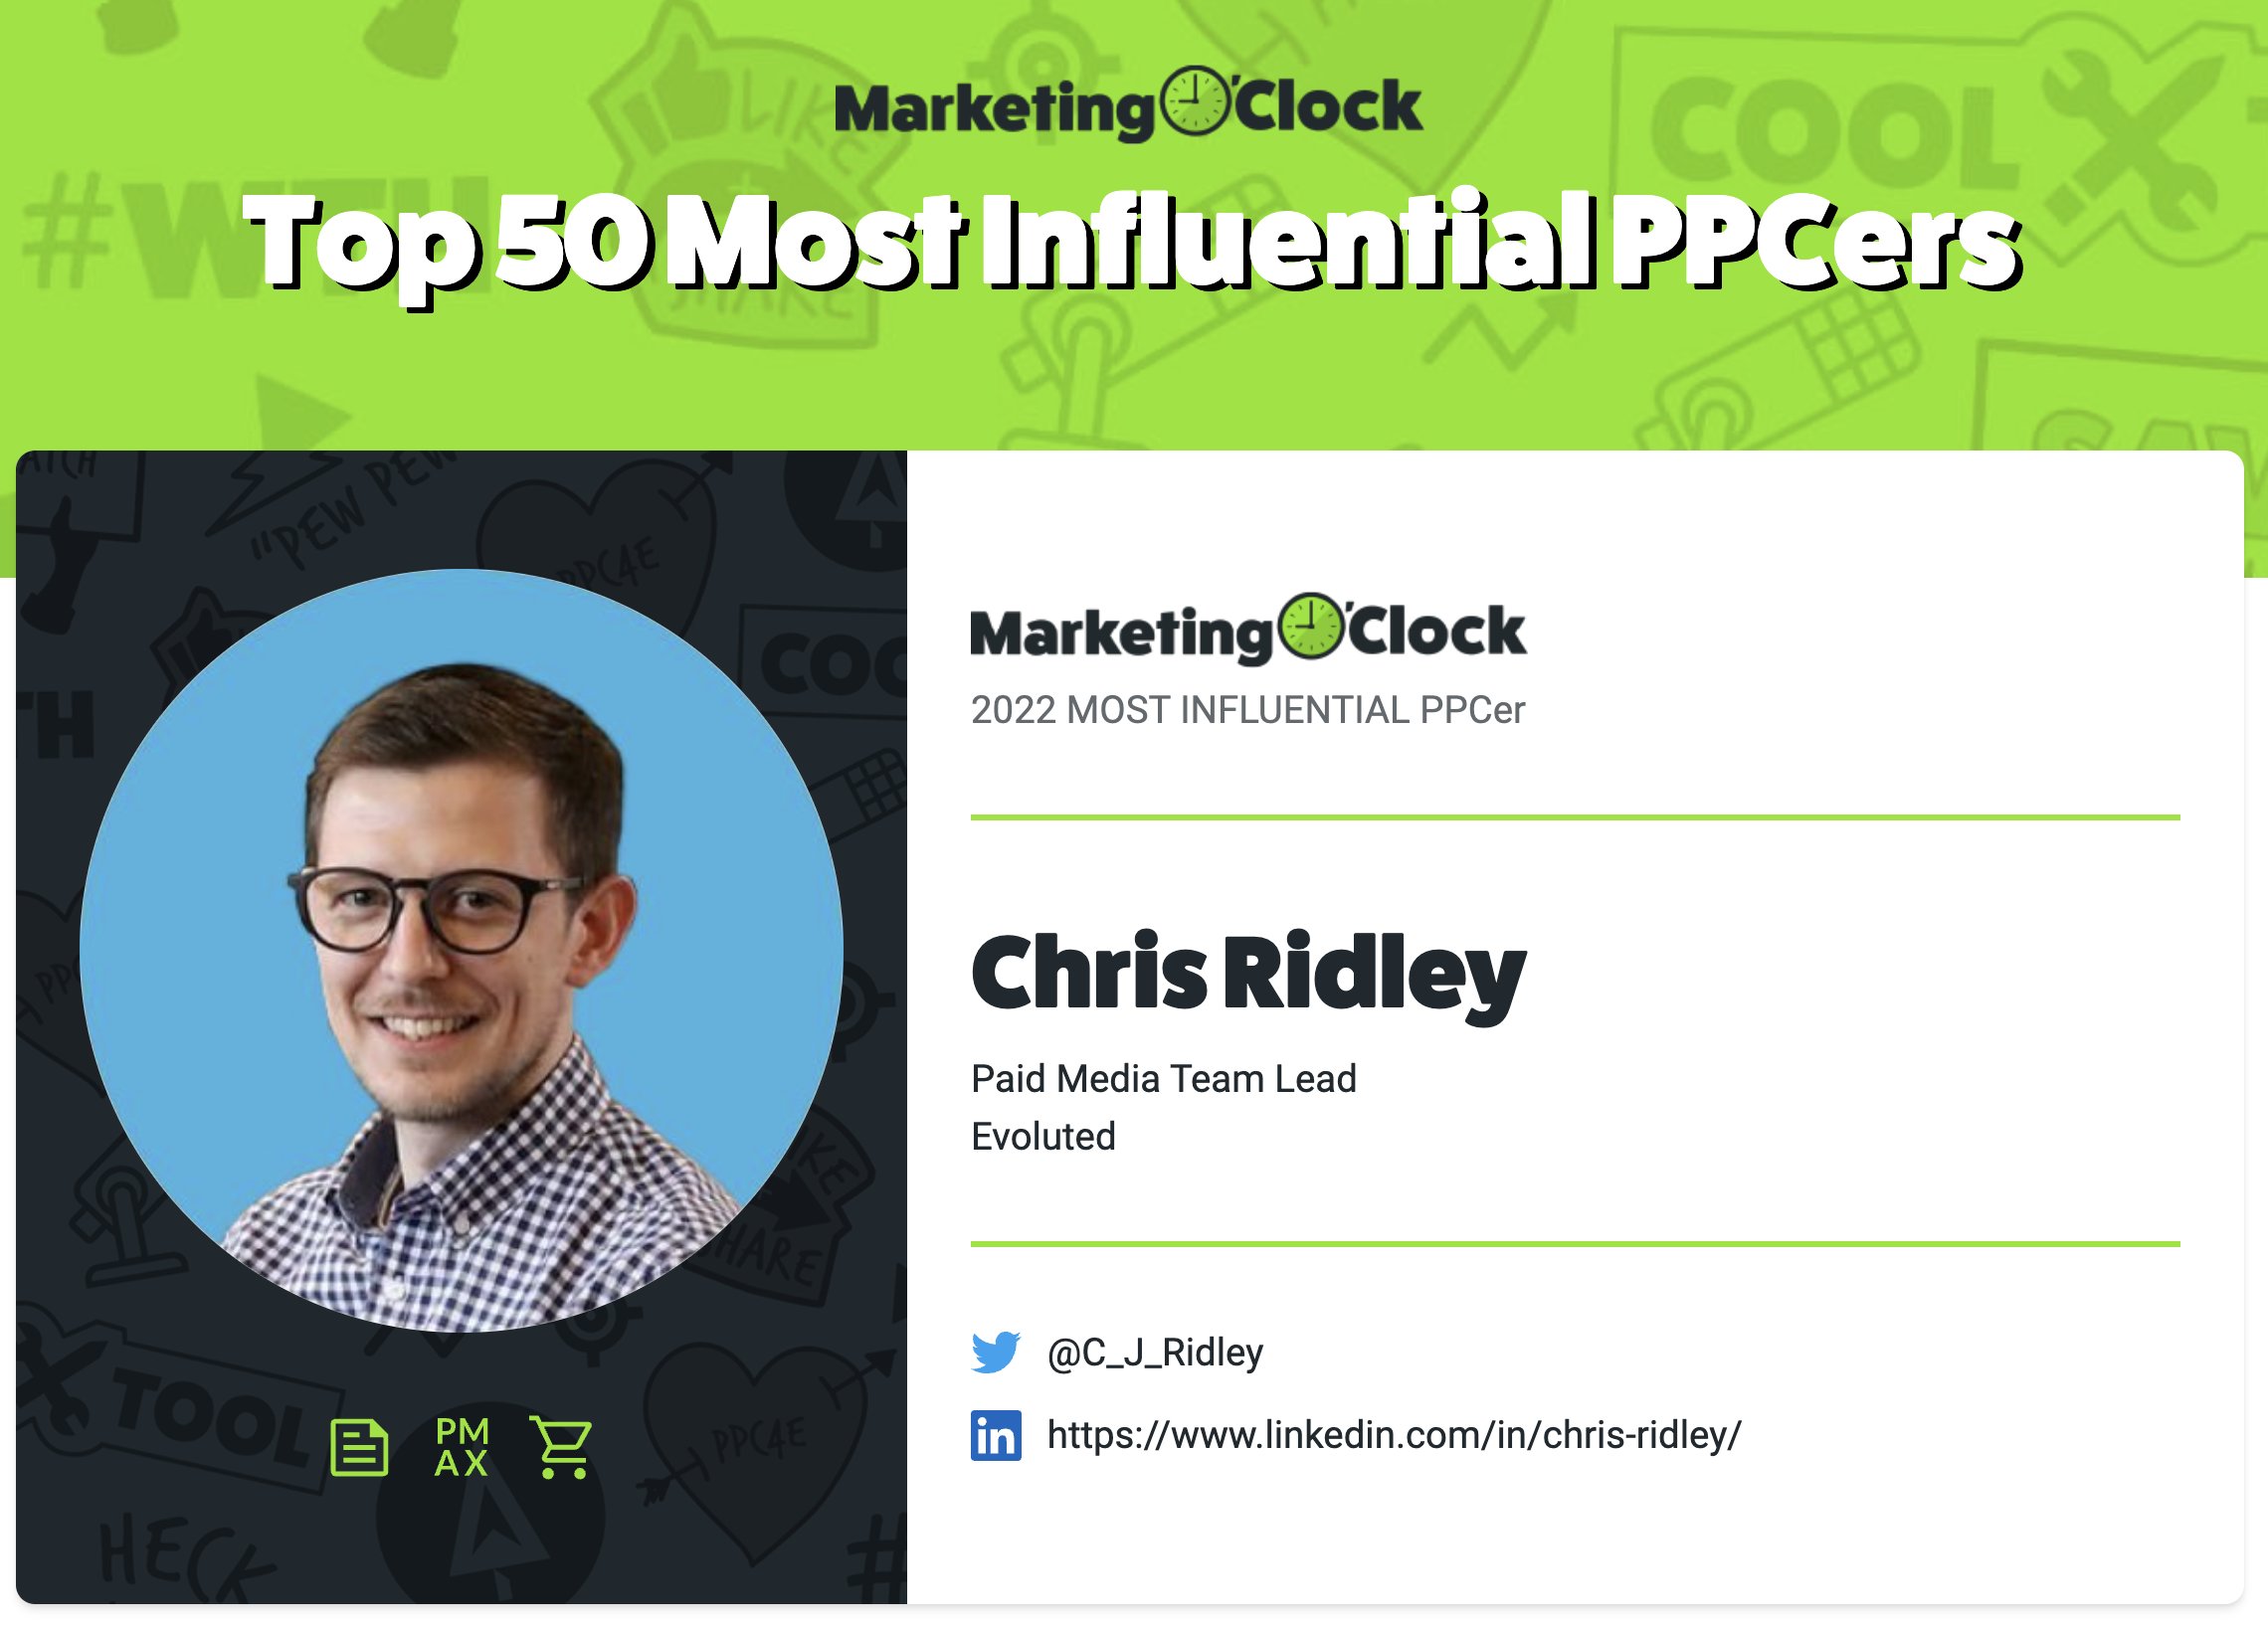 Chris Ridley's profile on Marketing O'Clock list